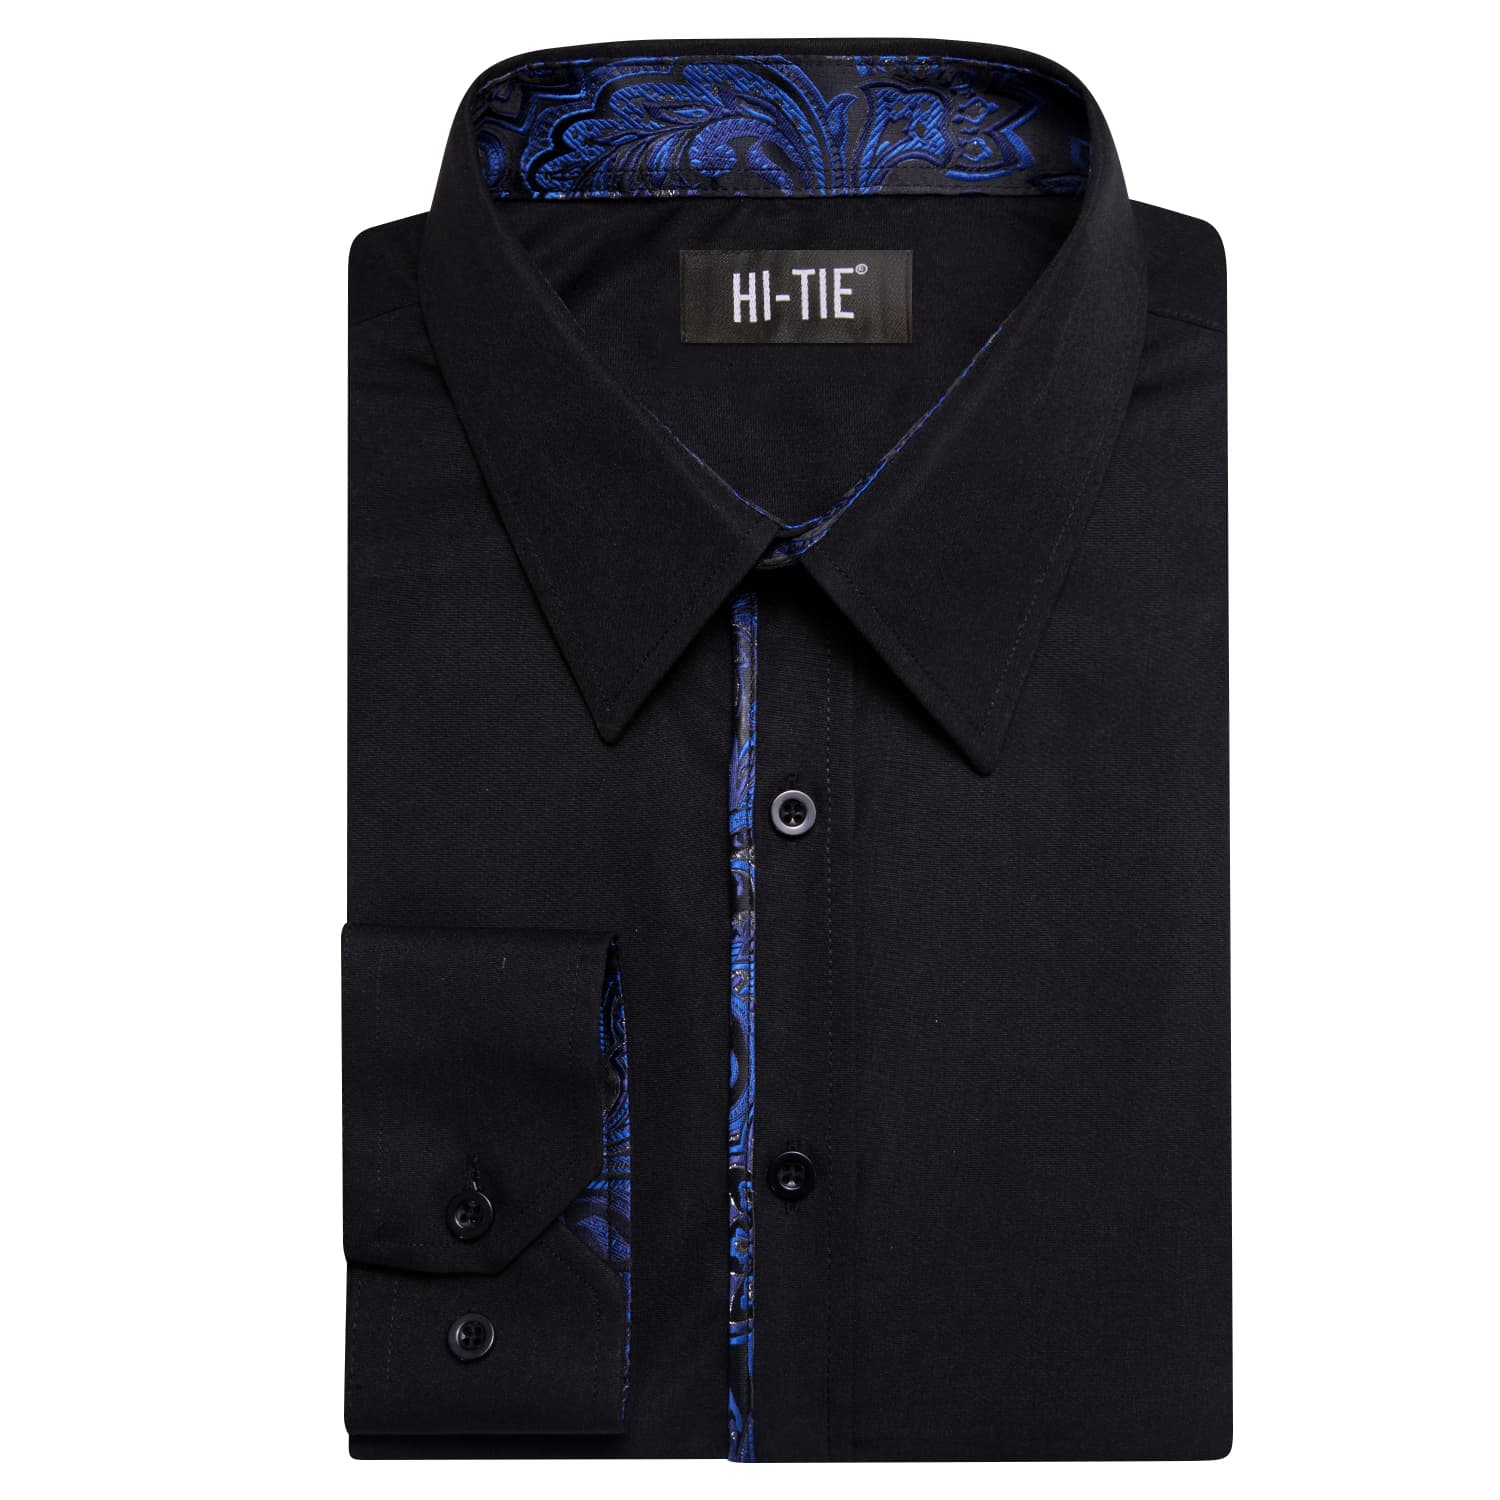 Hi-Tie Black Shirt with Blue Jacquard Collar Solid Shirt